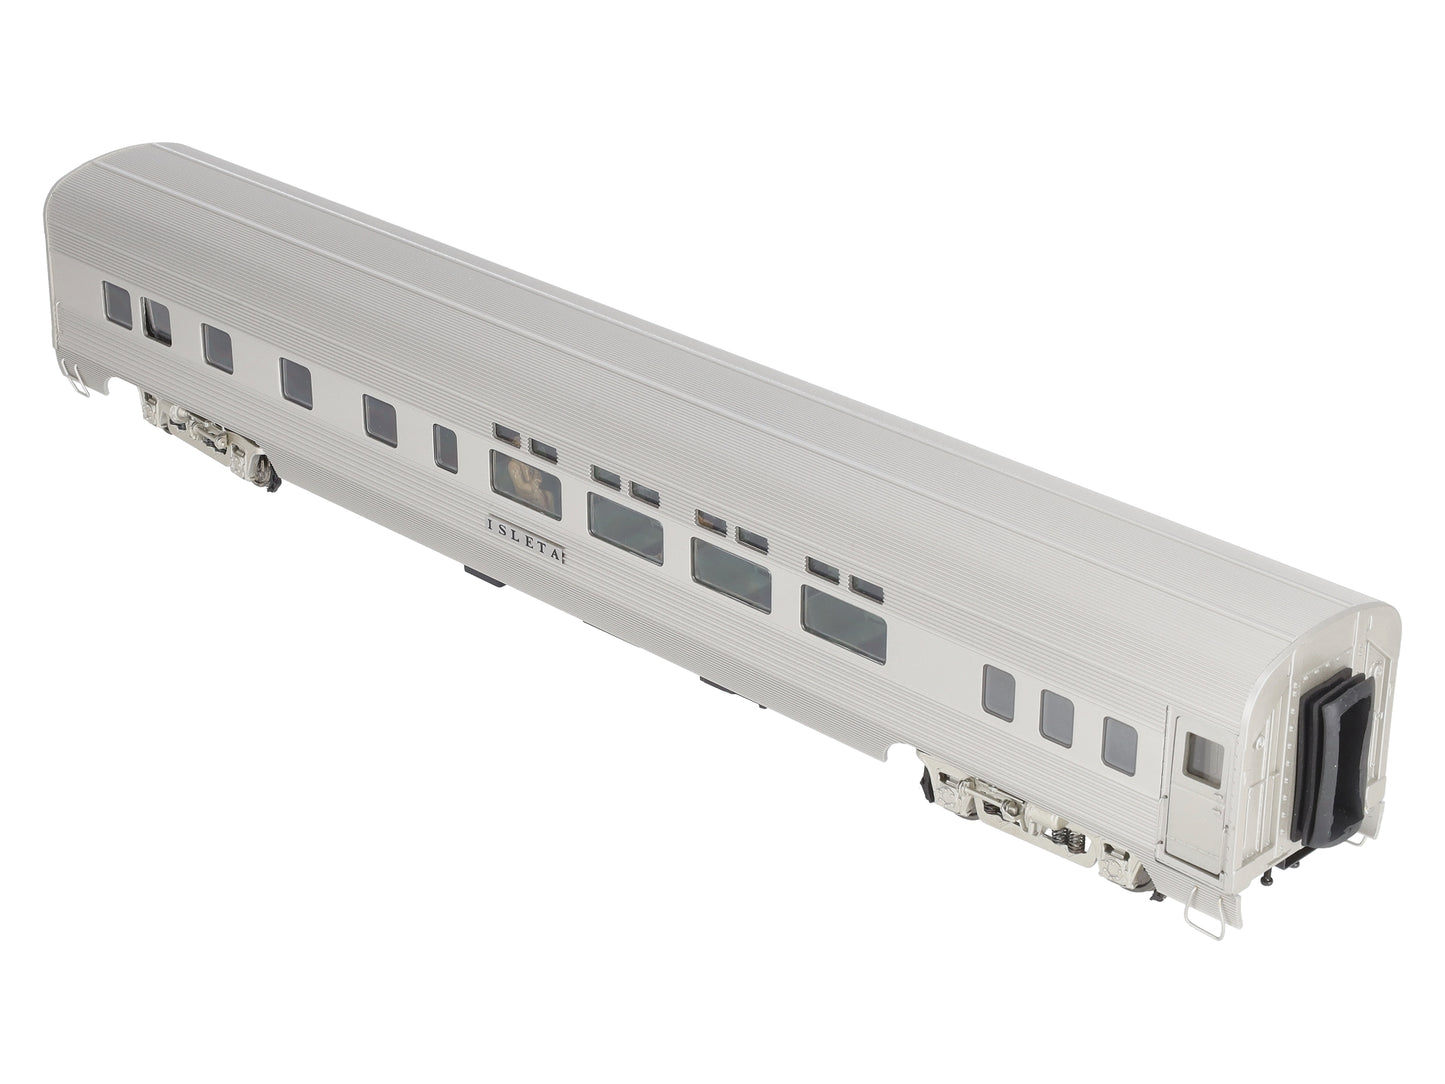 Golden Gate Depot O Gauge Santa Fe "Isleta" 21" Sleeper Car (2-Rail) EX/Box